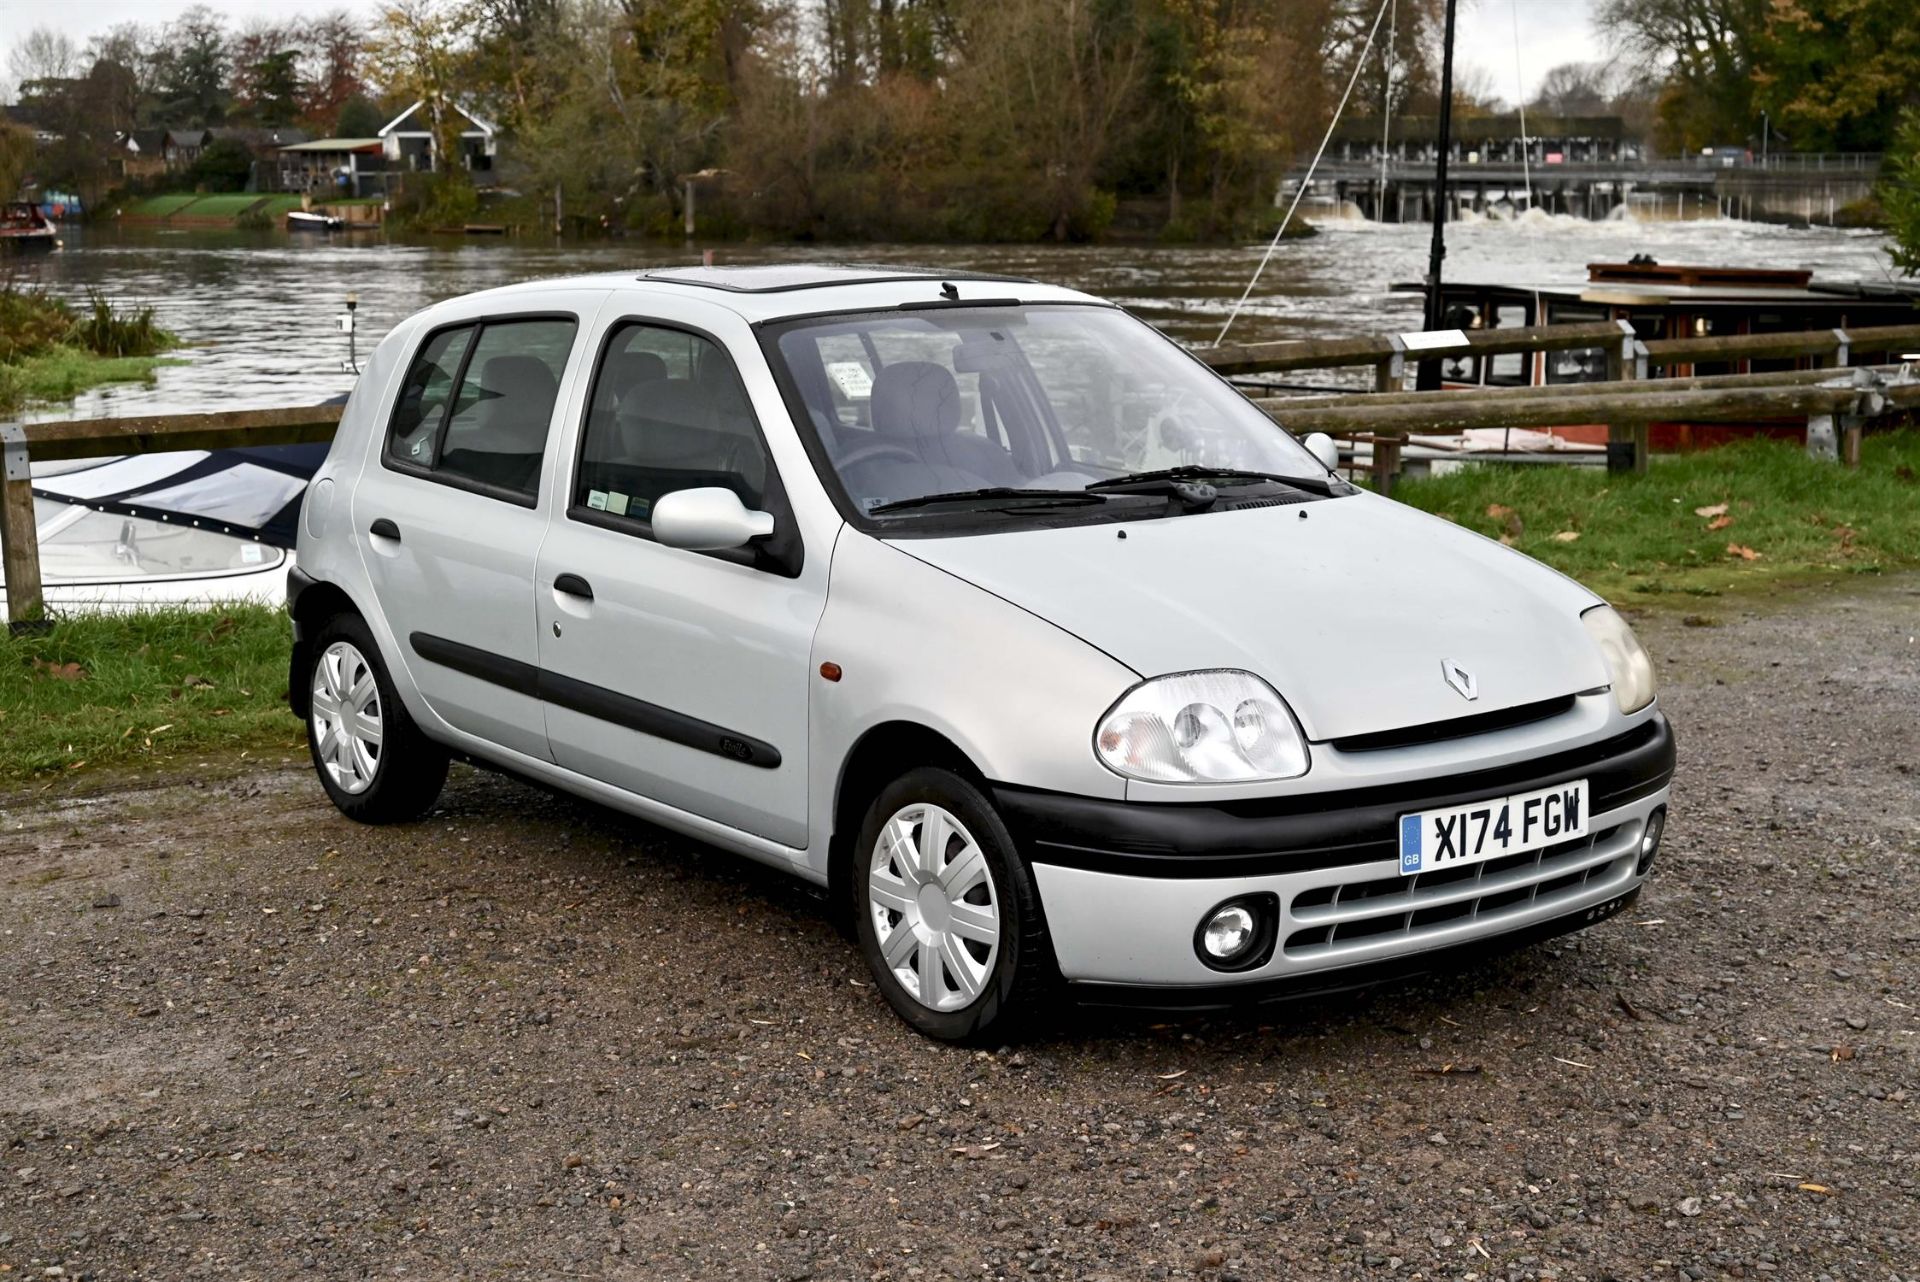 2000 Renault Clio 1.4 Etoile Hatchback. Registration number X174 FGW - Petrol, 5-Speed Manual.